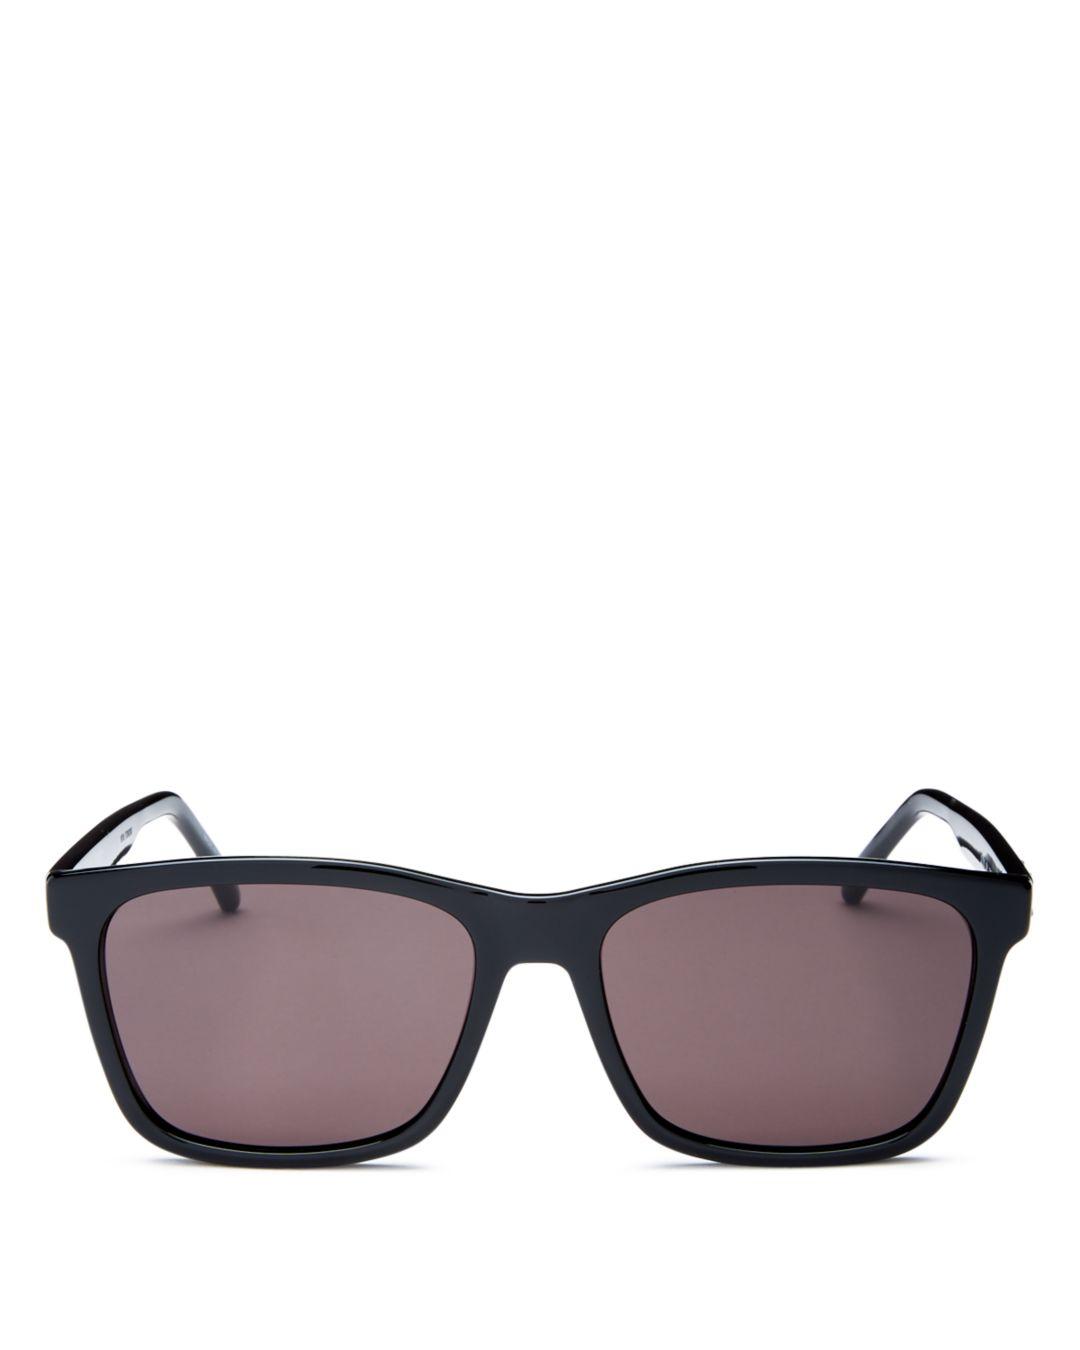 Saint Laurent Mens' Square Sunglasses in Shiny Black/Black (Black) for